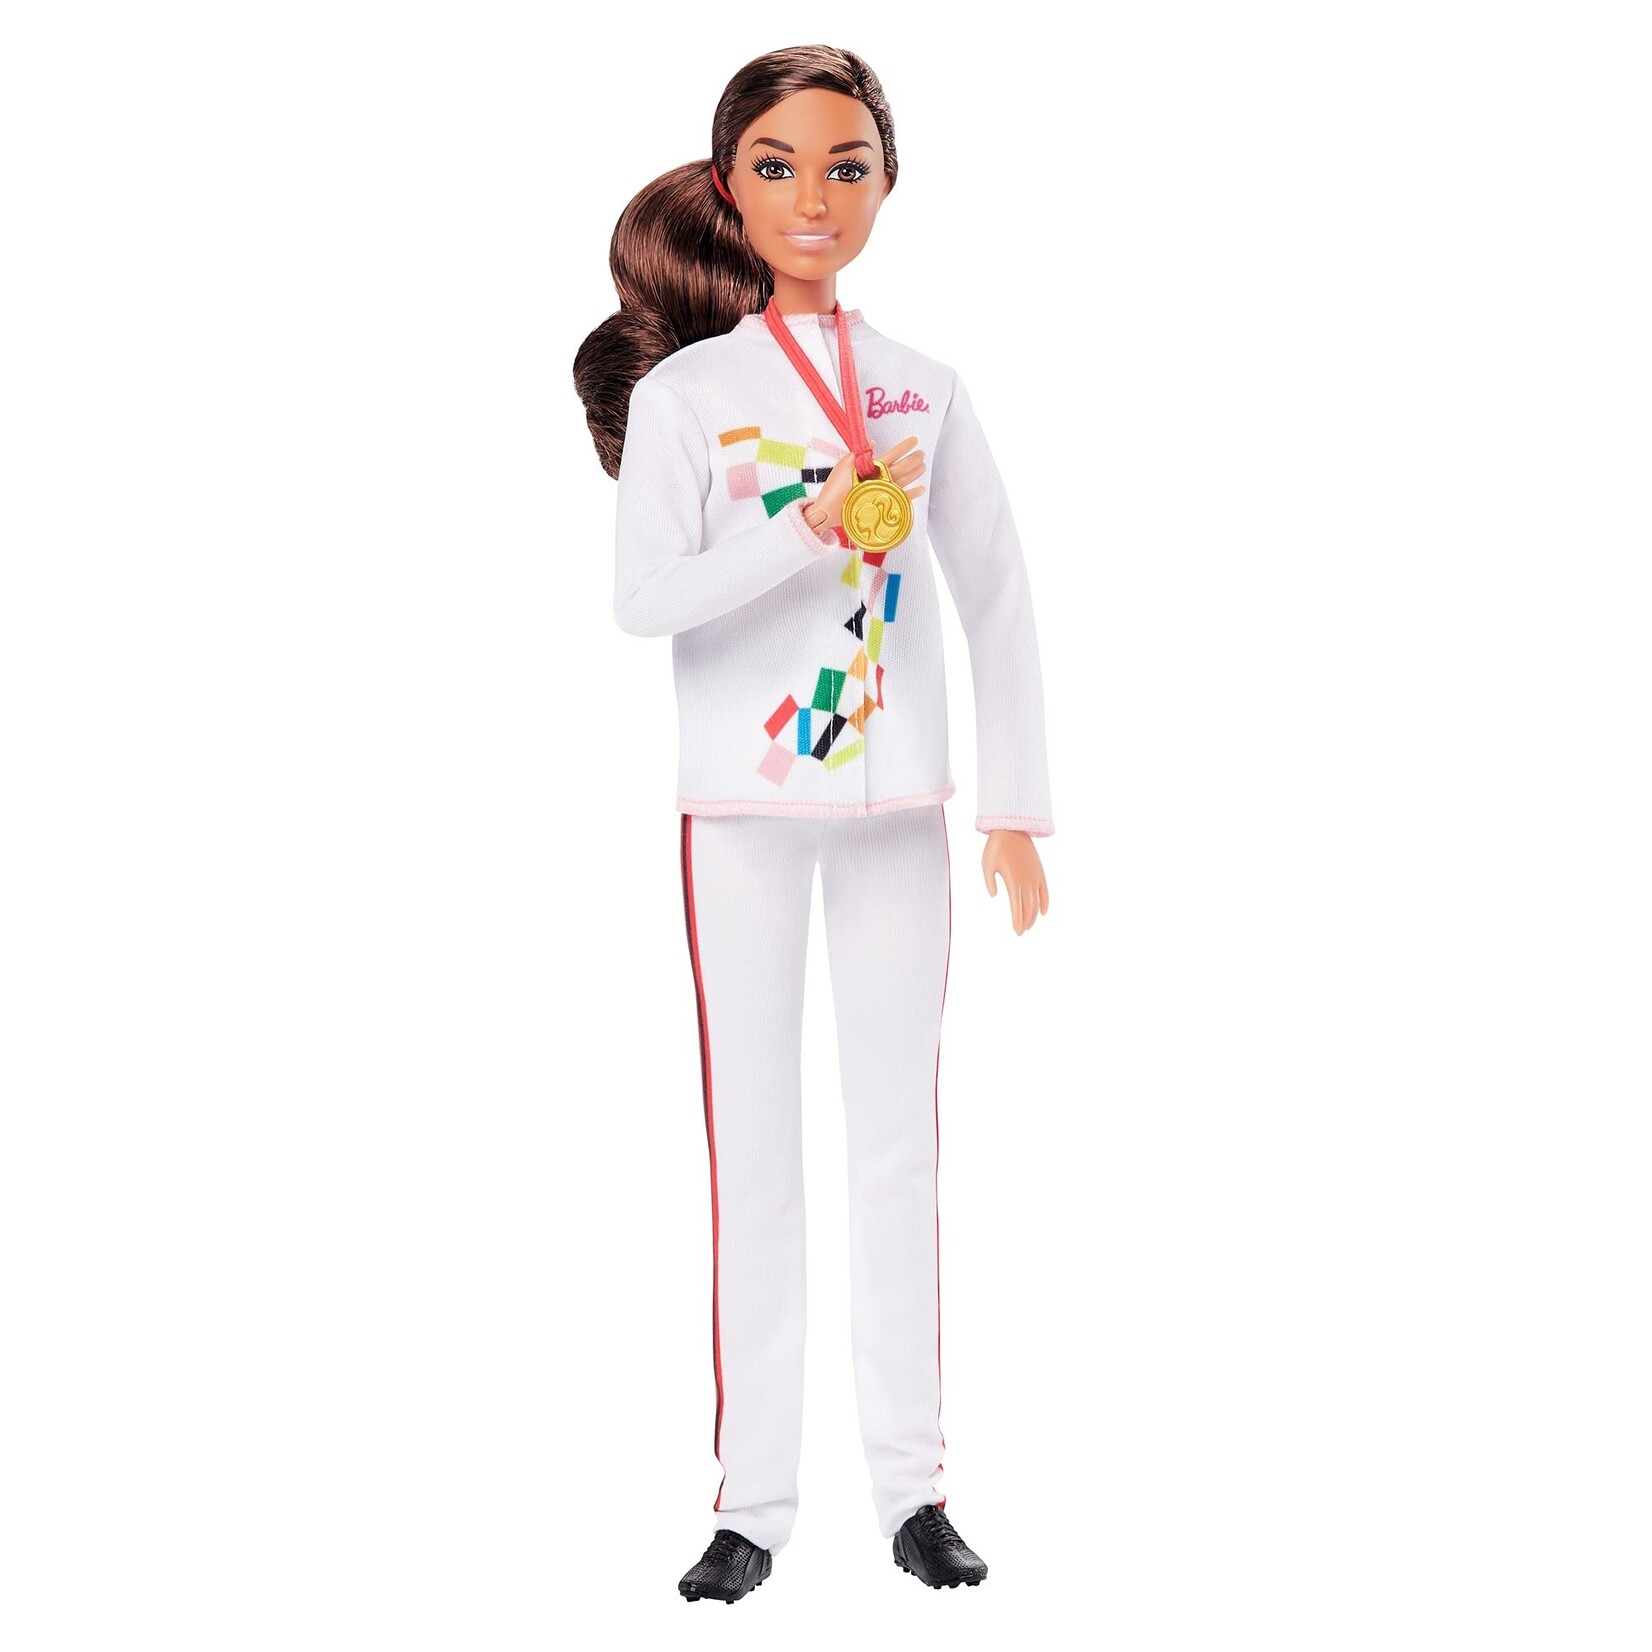 Barbie Tokyo Olympics 2020 Softball Doll